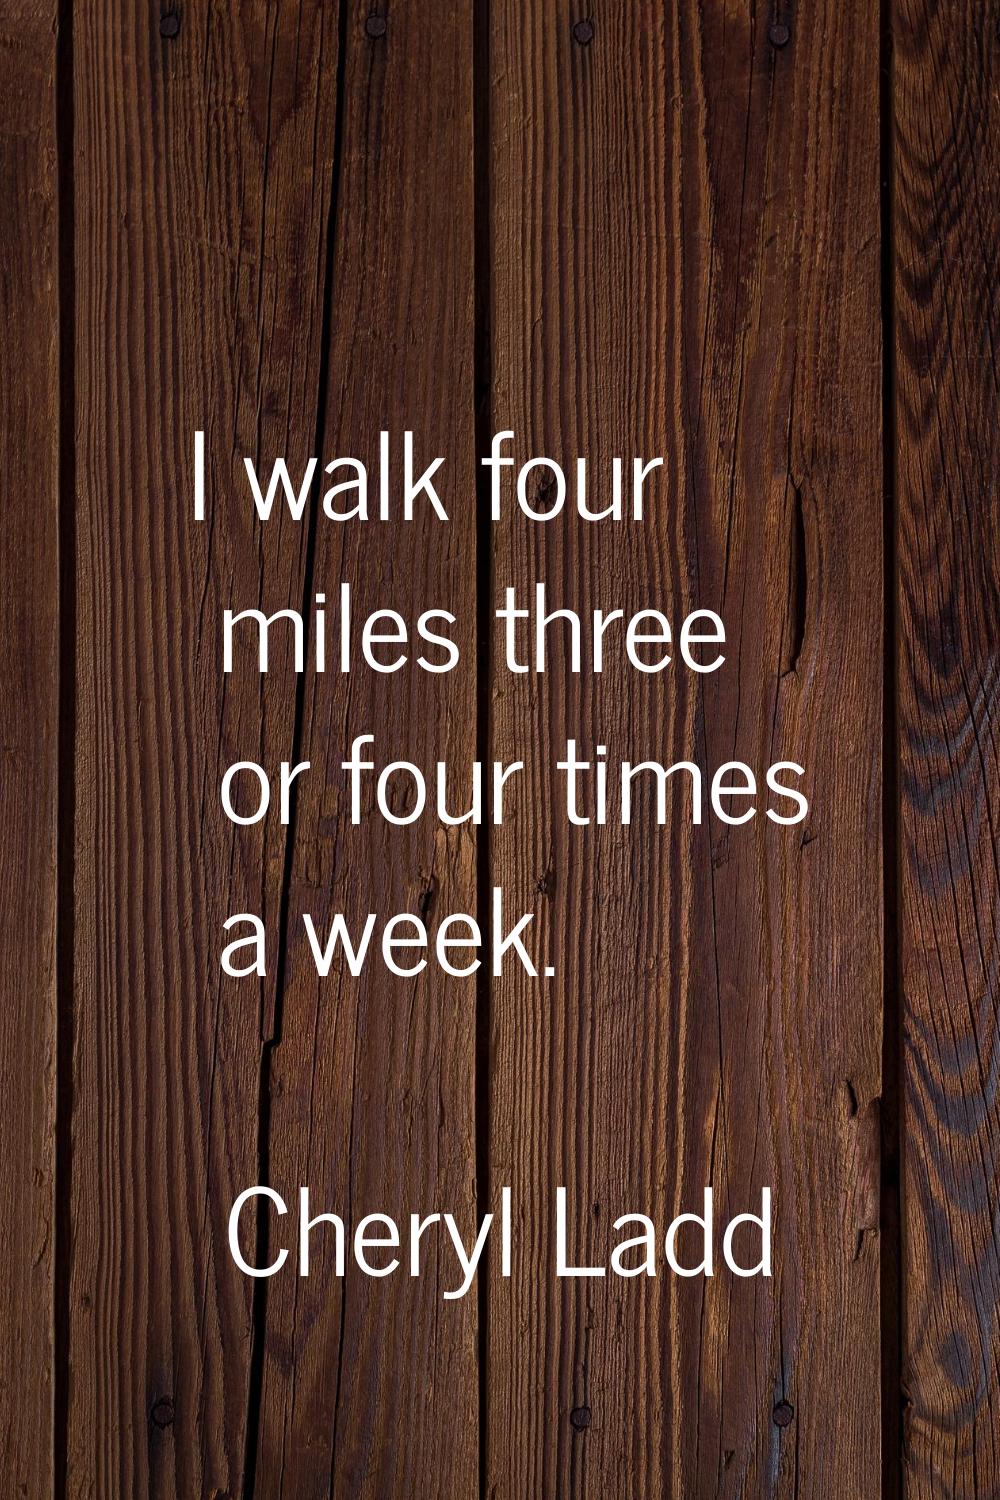 I walk four miles three or four times a week.